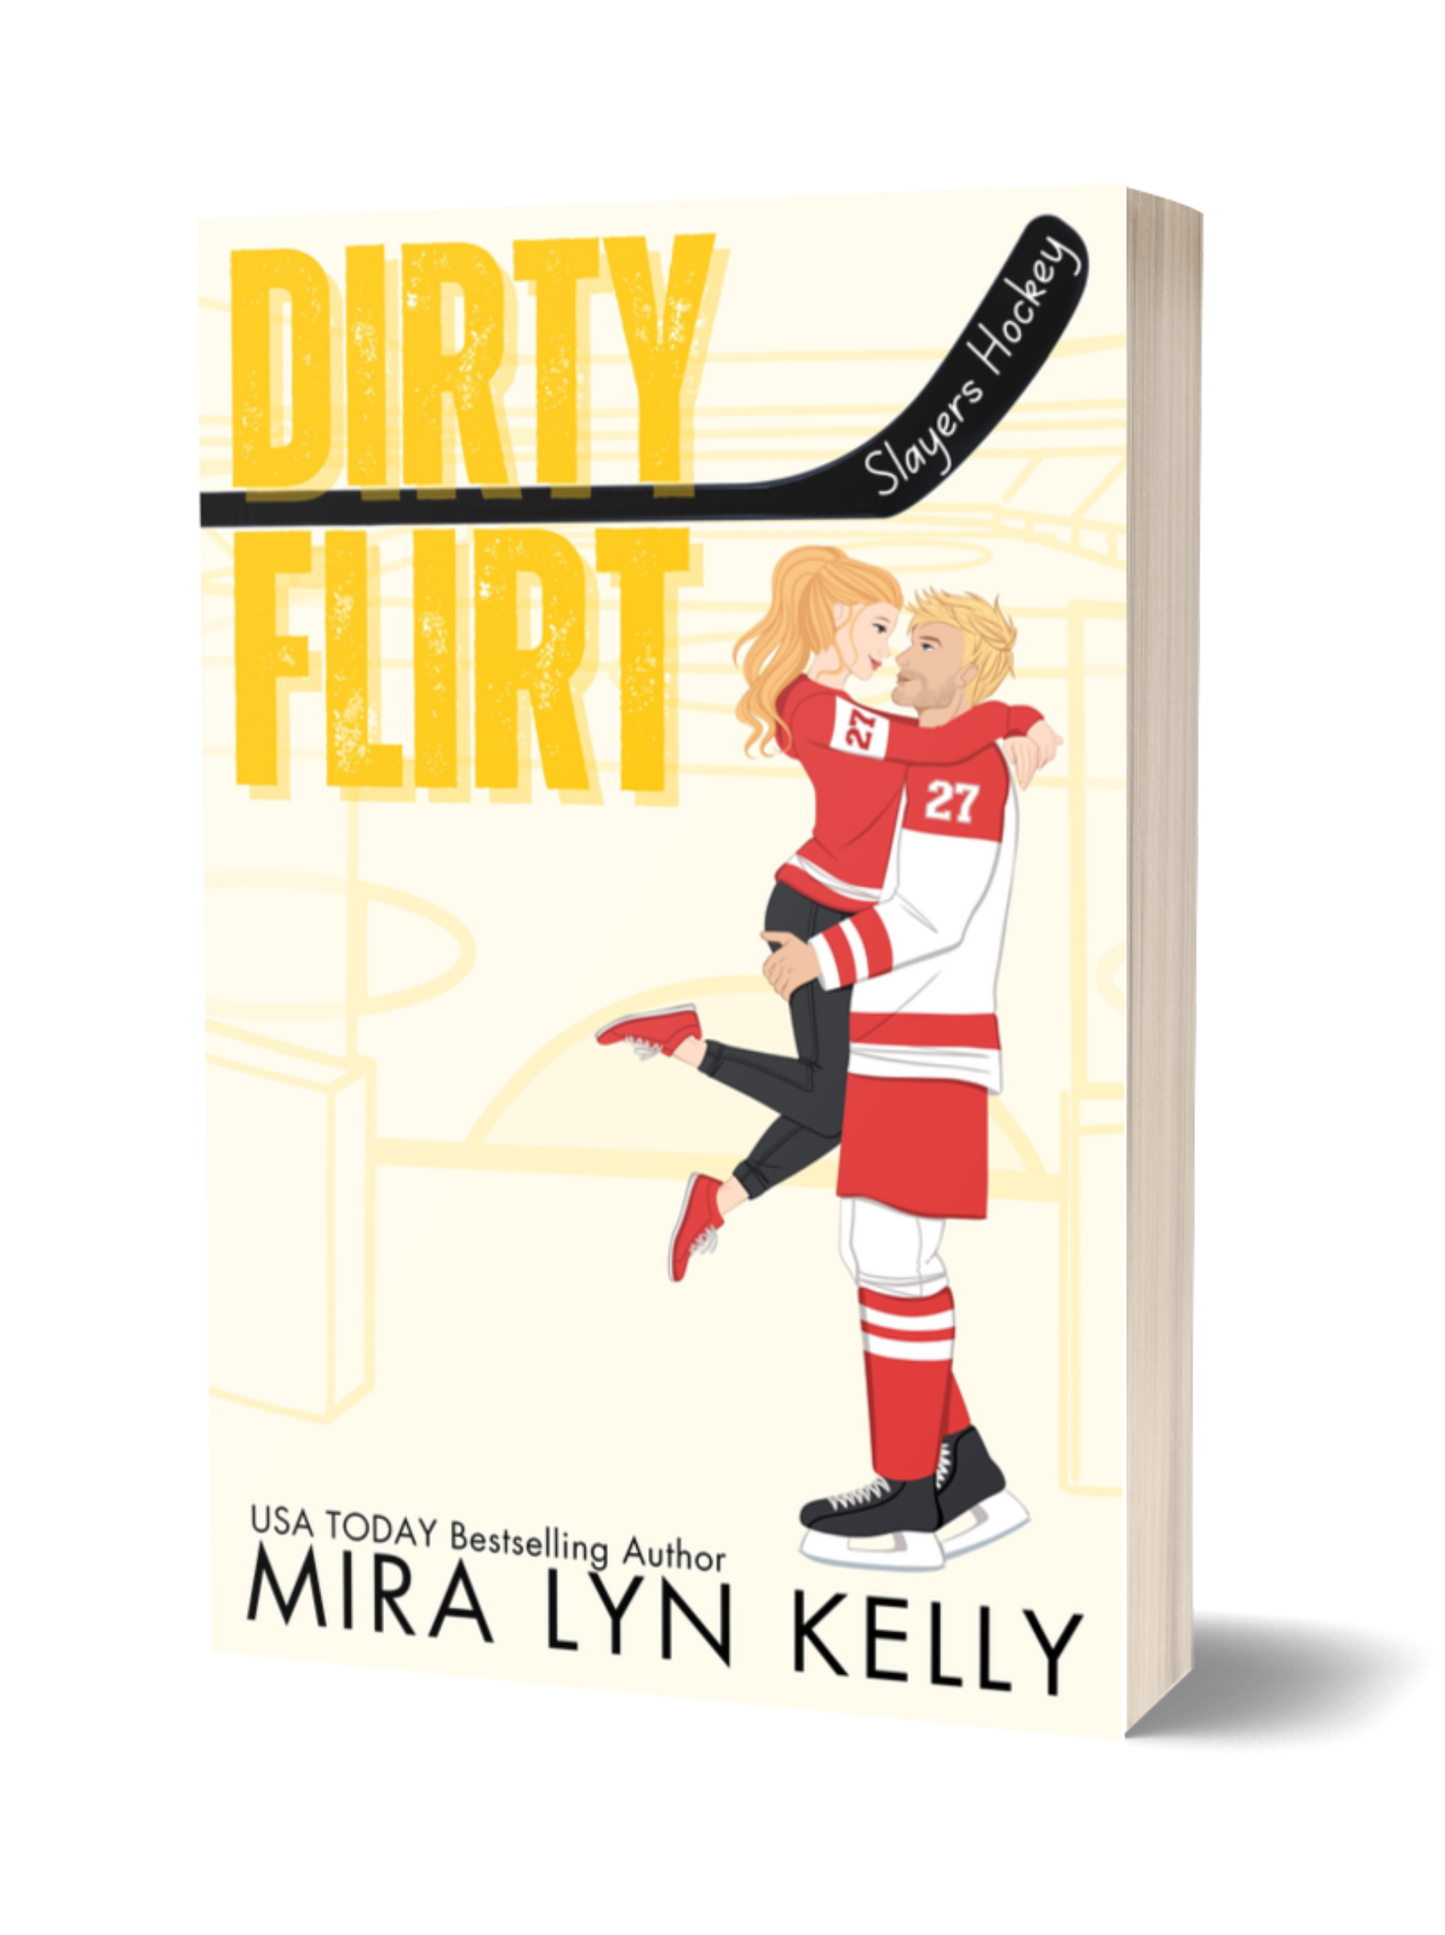 DIRTY FLIRT (Illustrated Cover), Slayers Hockey